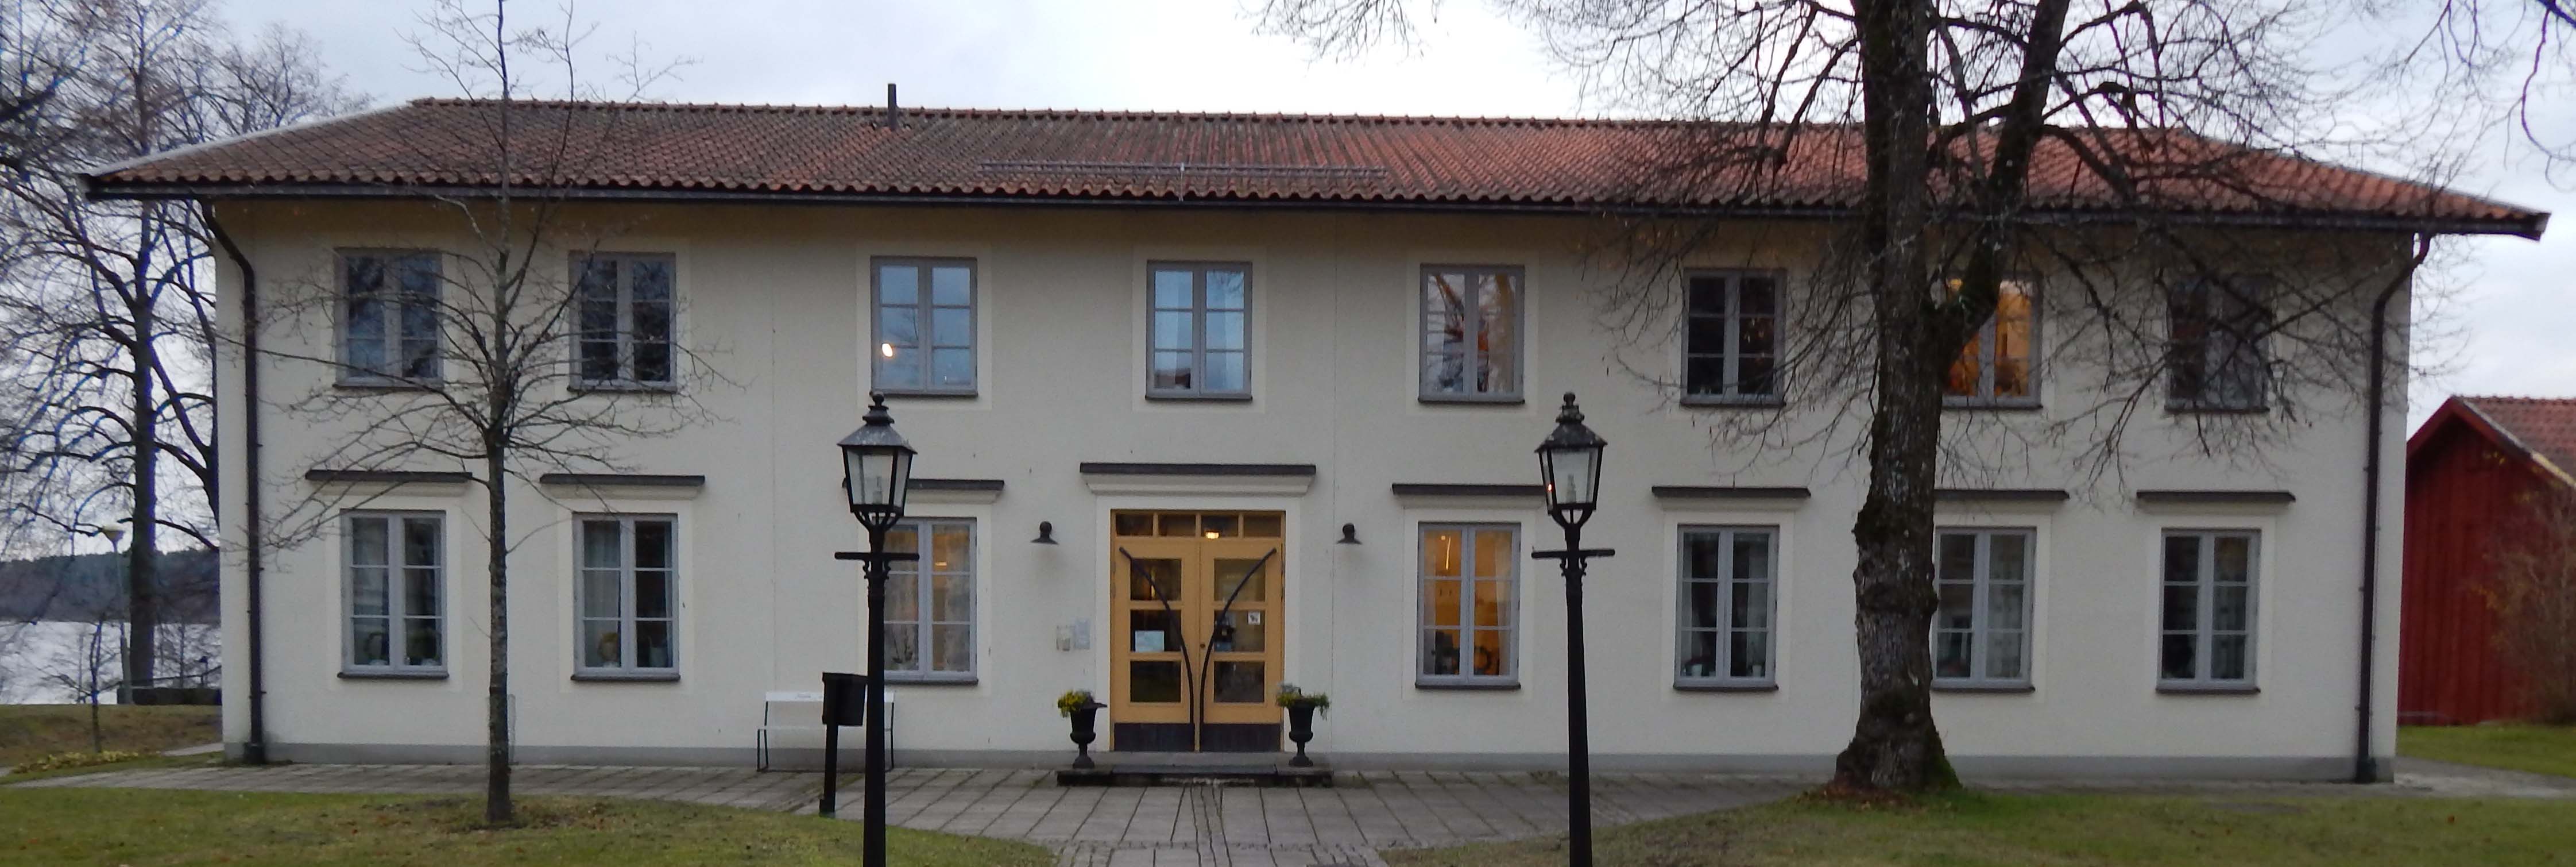 Församlingshemmet i Lindesberg